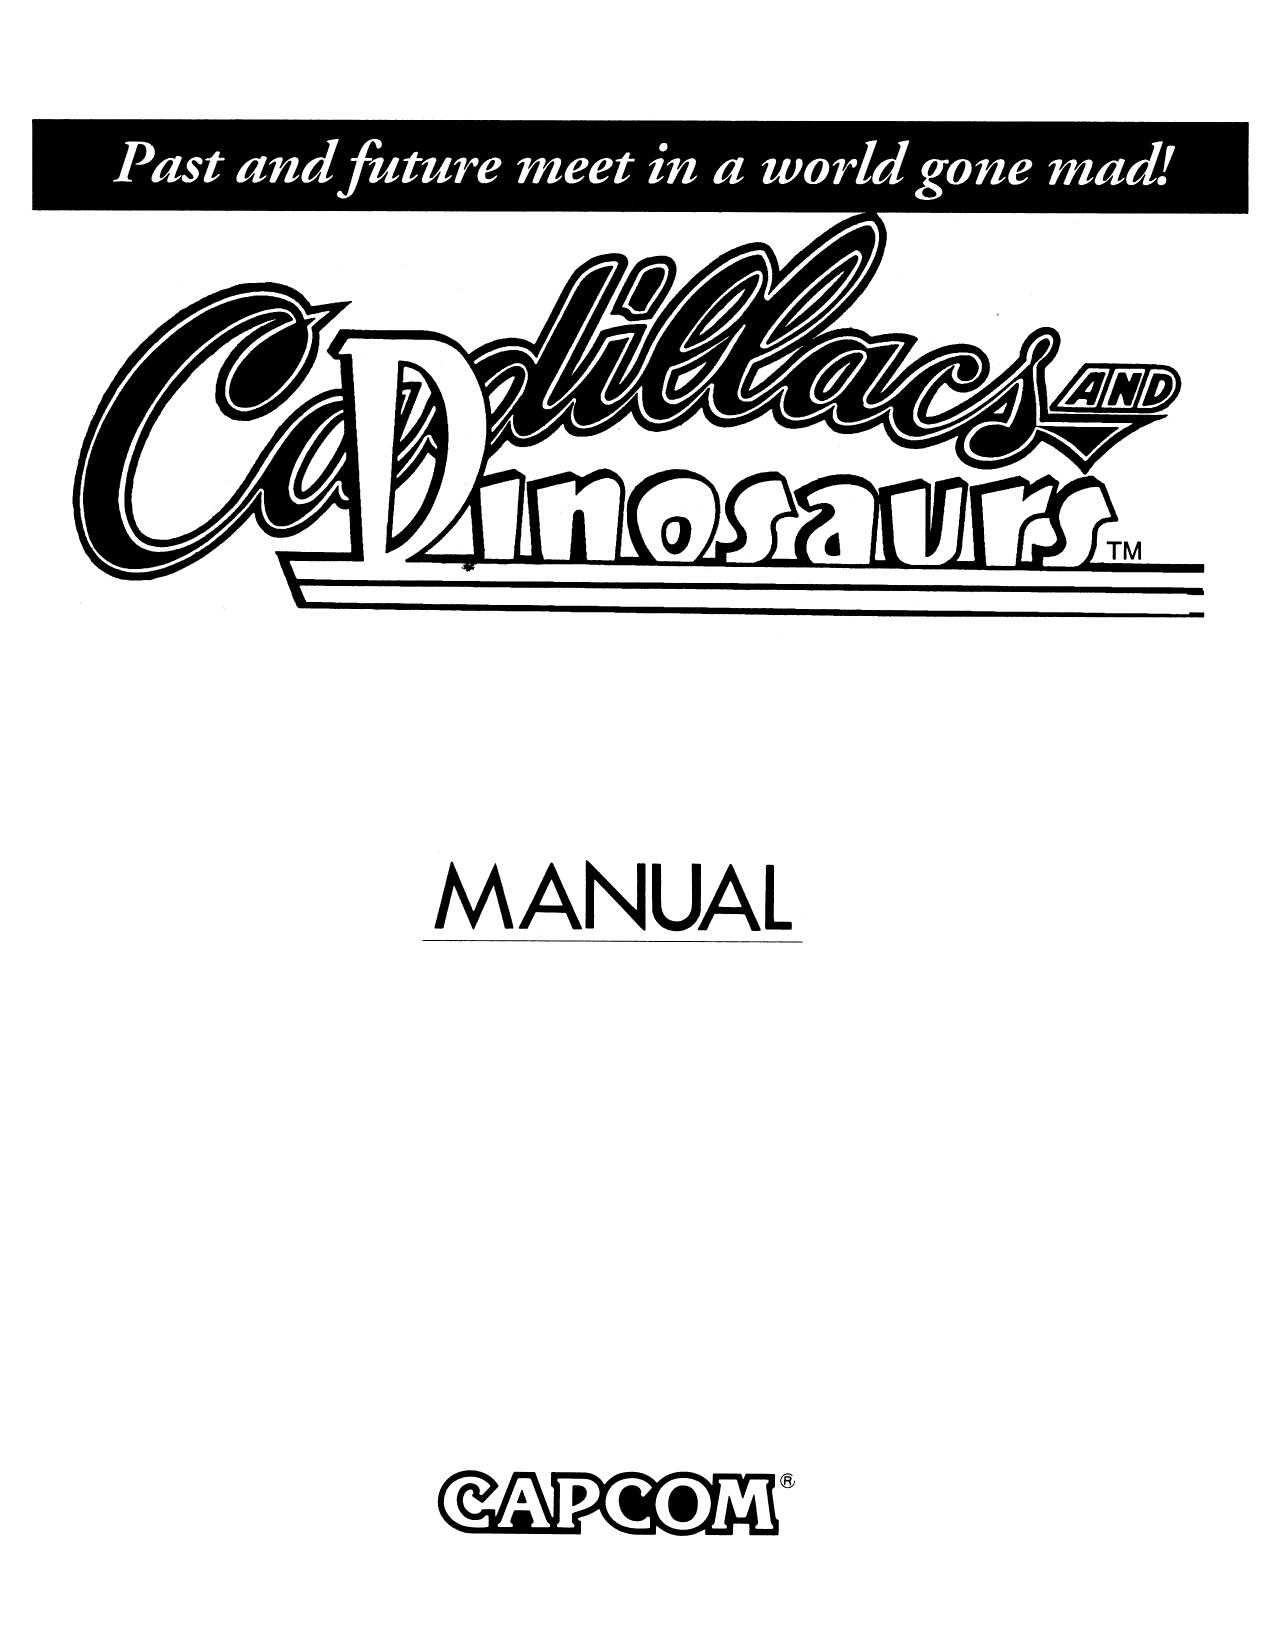 Cadillacs Manual